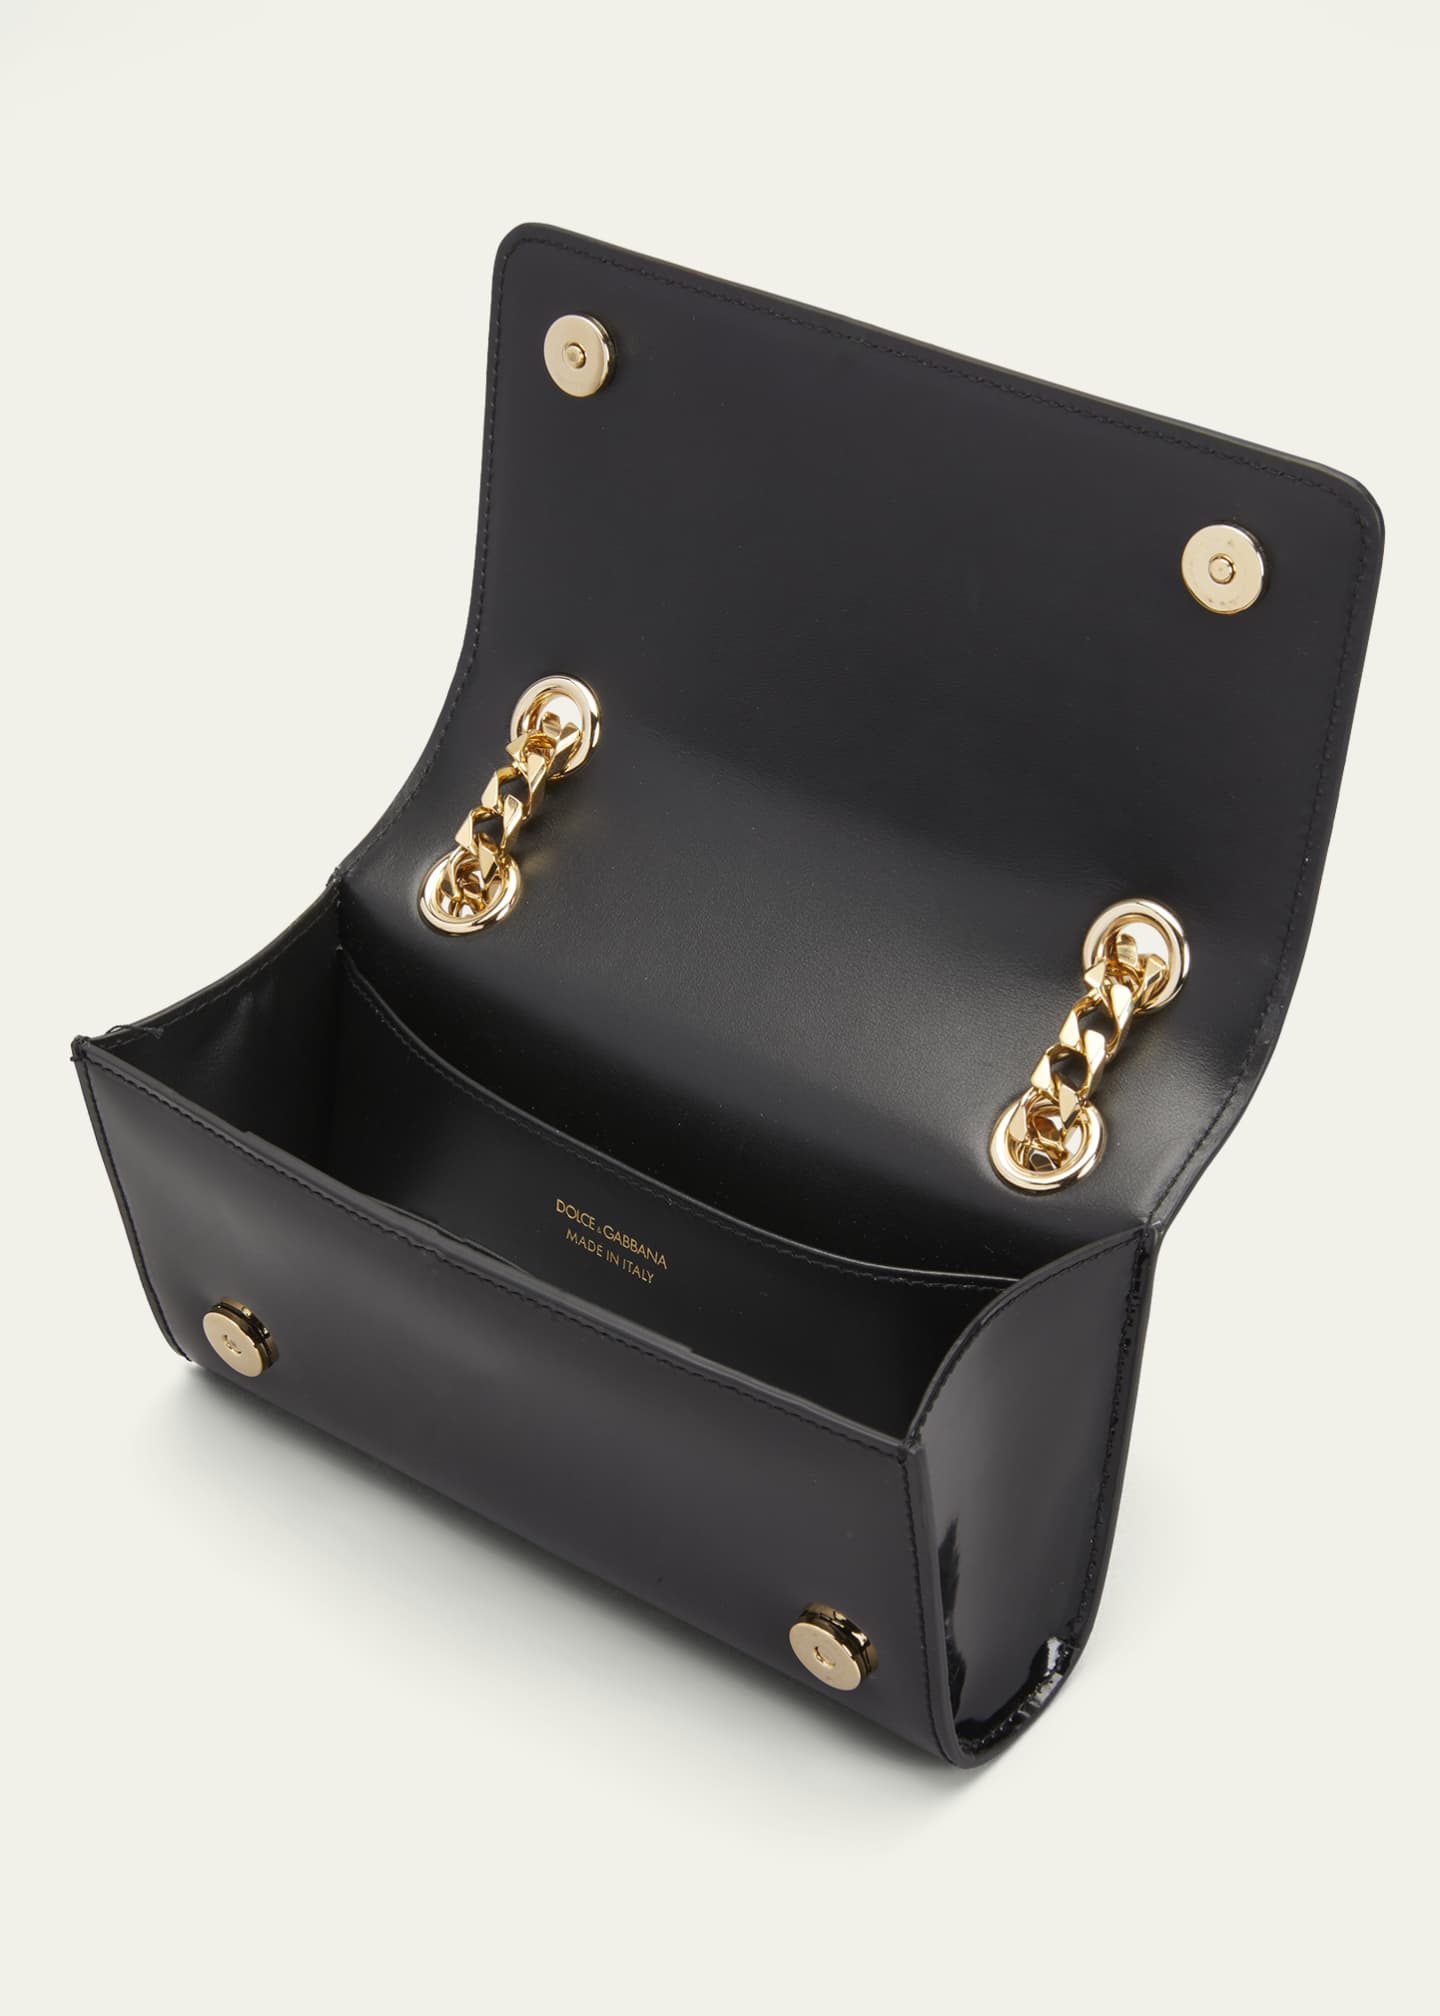 Dolce & Gabbana Patent Leather DG Logo Bag Crossbody Black